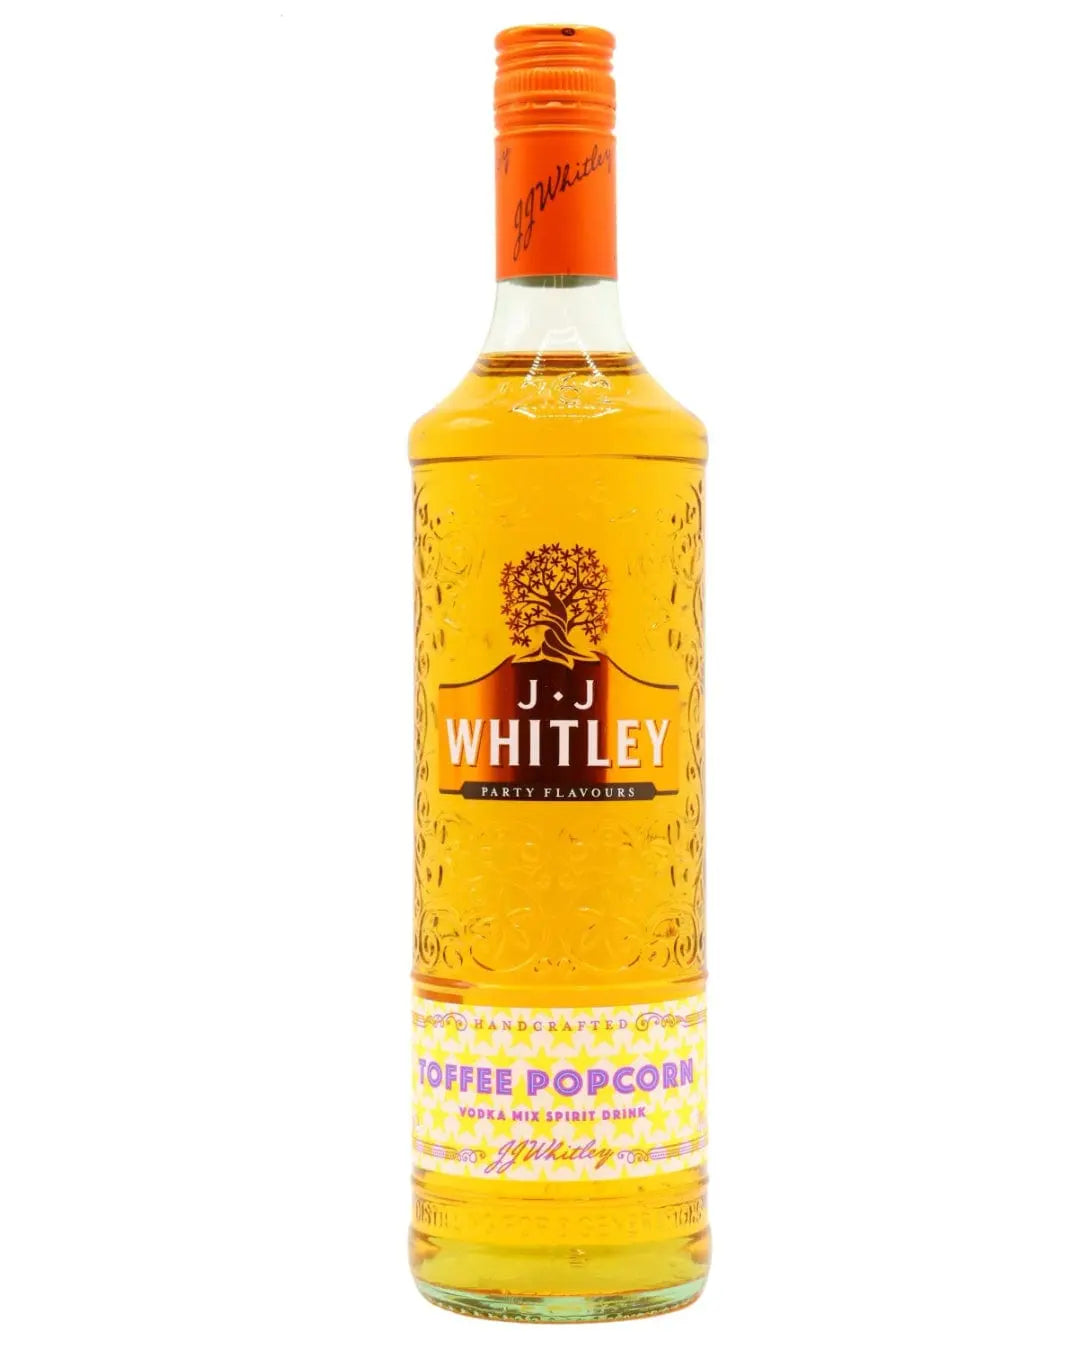 J.J. Whitley Toffee Popcorn Vodka Mix Spirit Drink, 70 cl Vodka